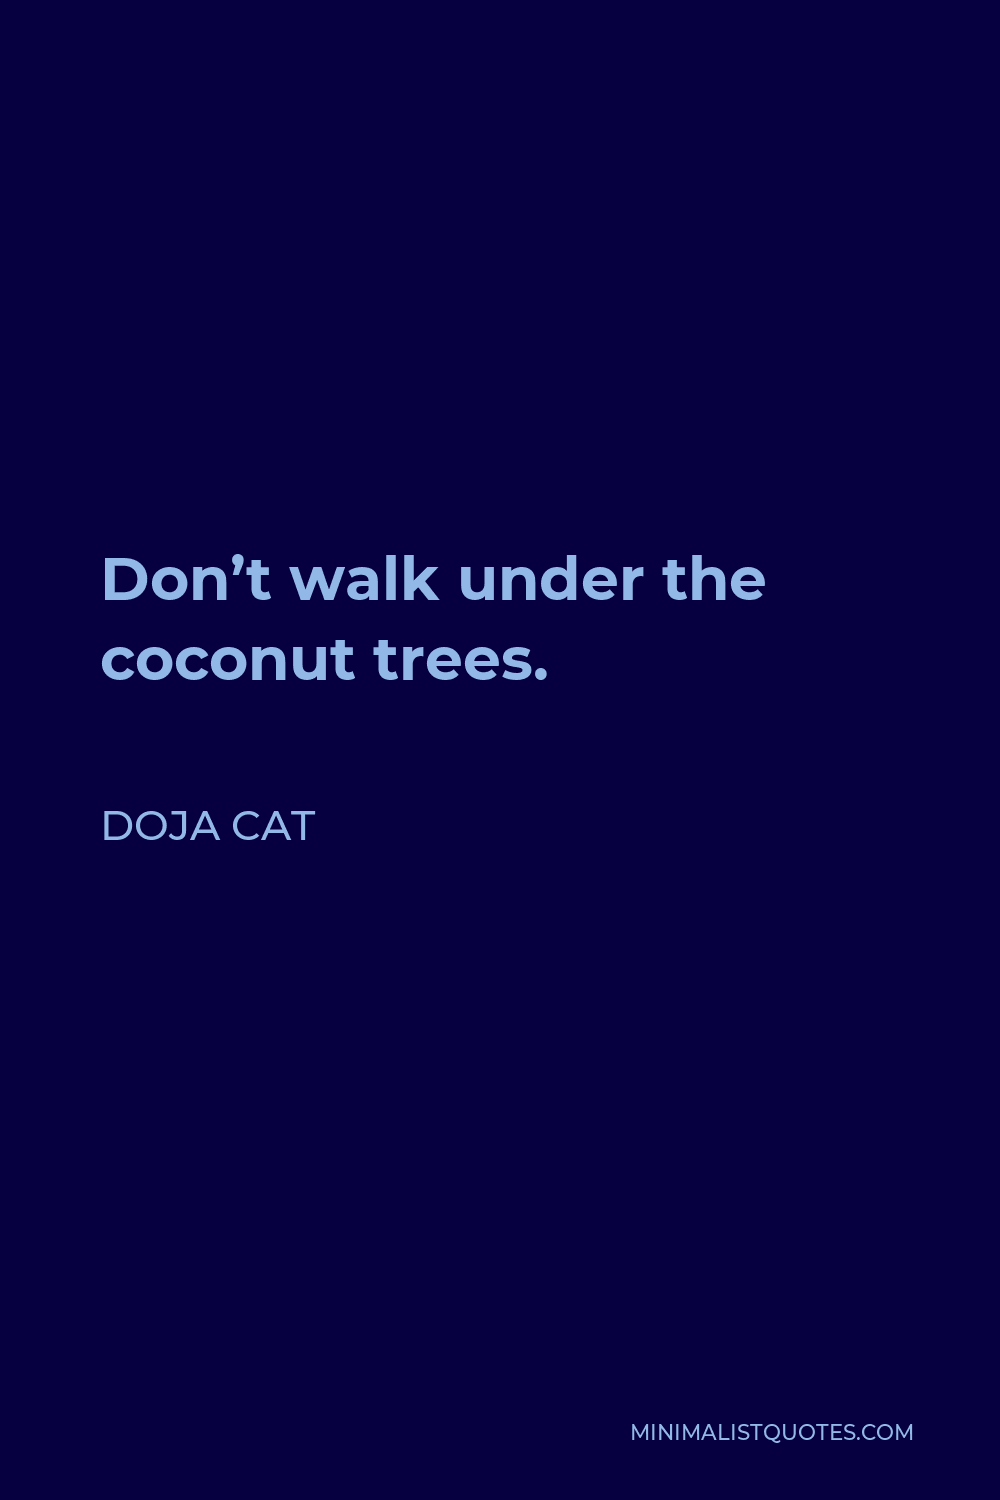 Doja Cat Quote - Don’t walk under the coconut trees.